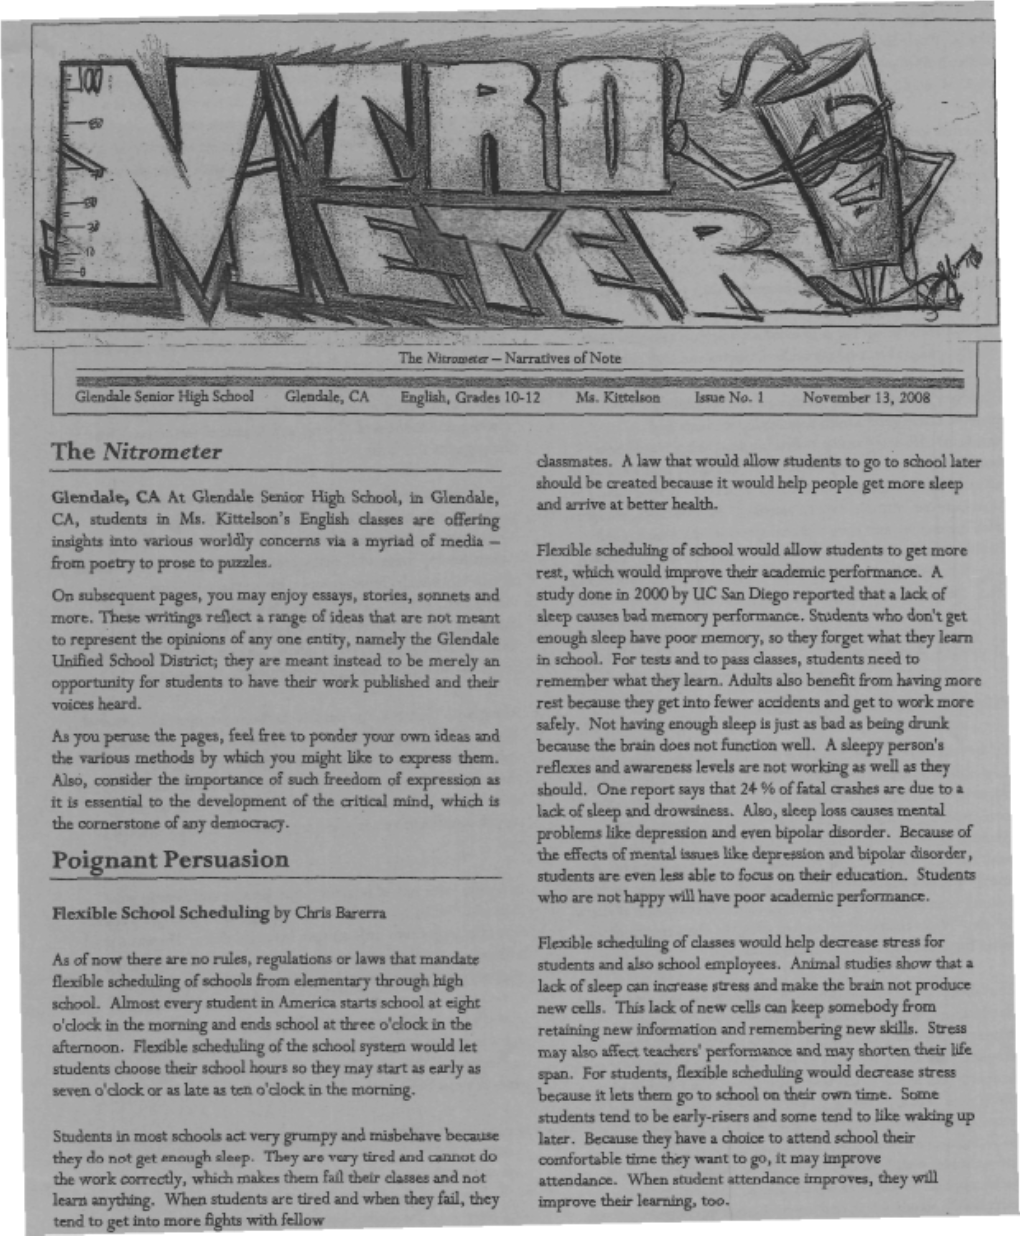 The Nitrometer Issue I